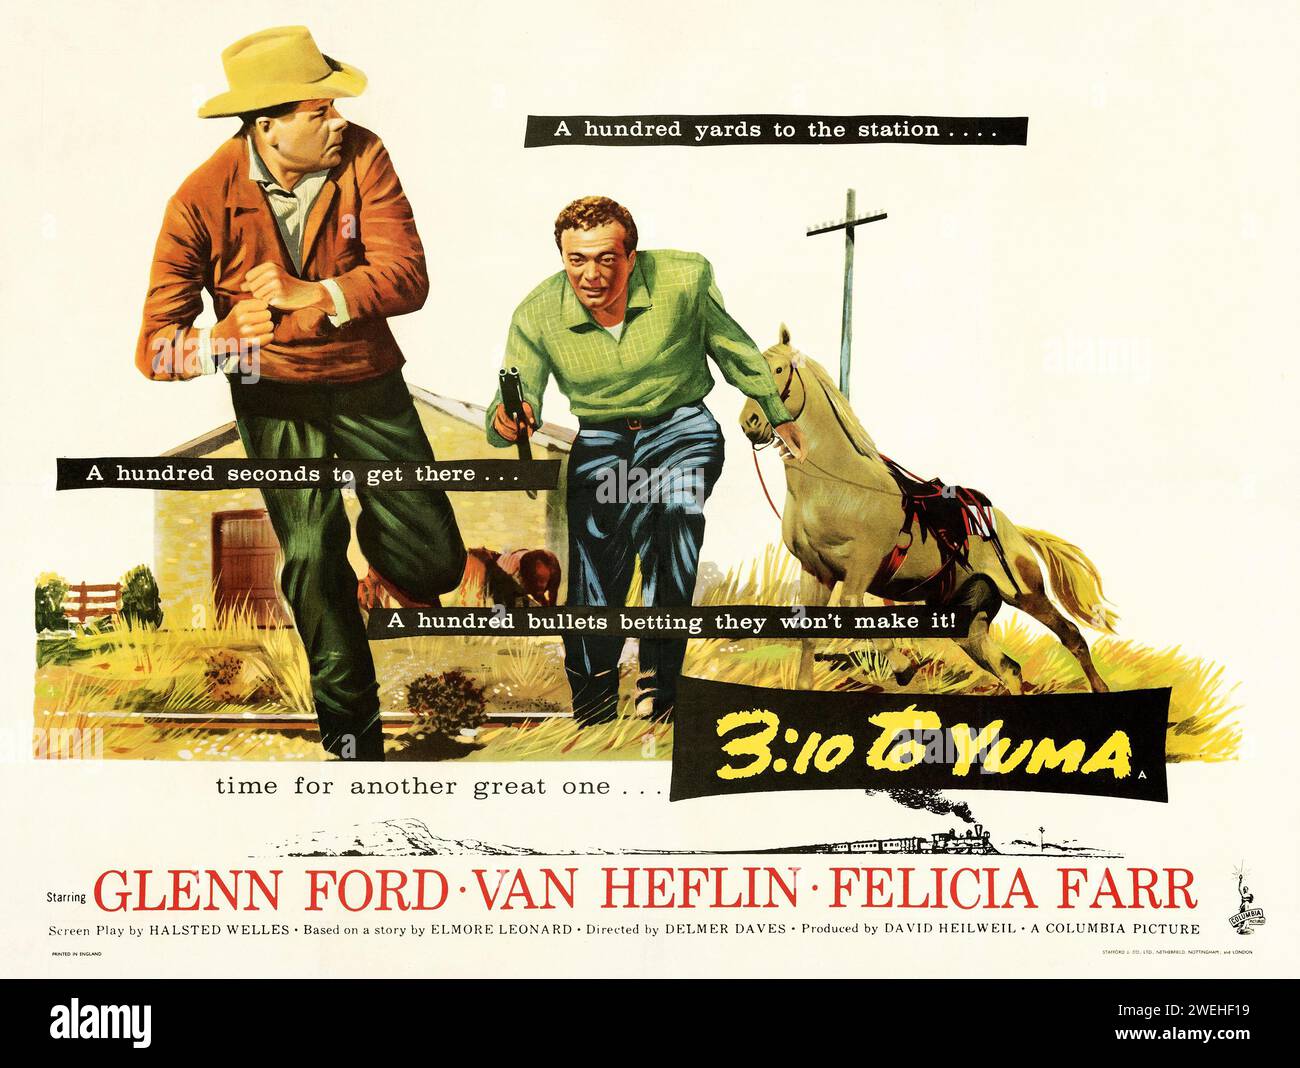 1950s movie poster - 3-10 to Yuma (Columbia, 1957). Vintage film poster - Glenn Ford, Van Heflin, Felicia Farr Stock Photo